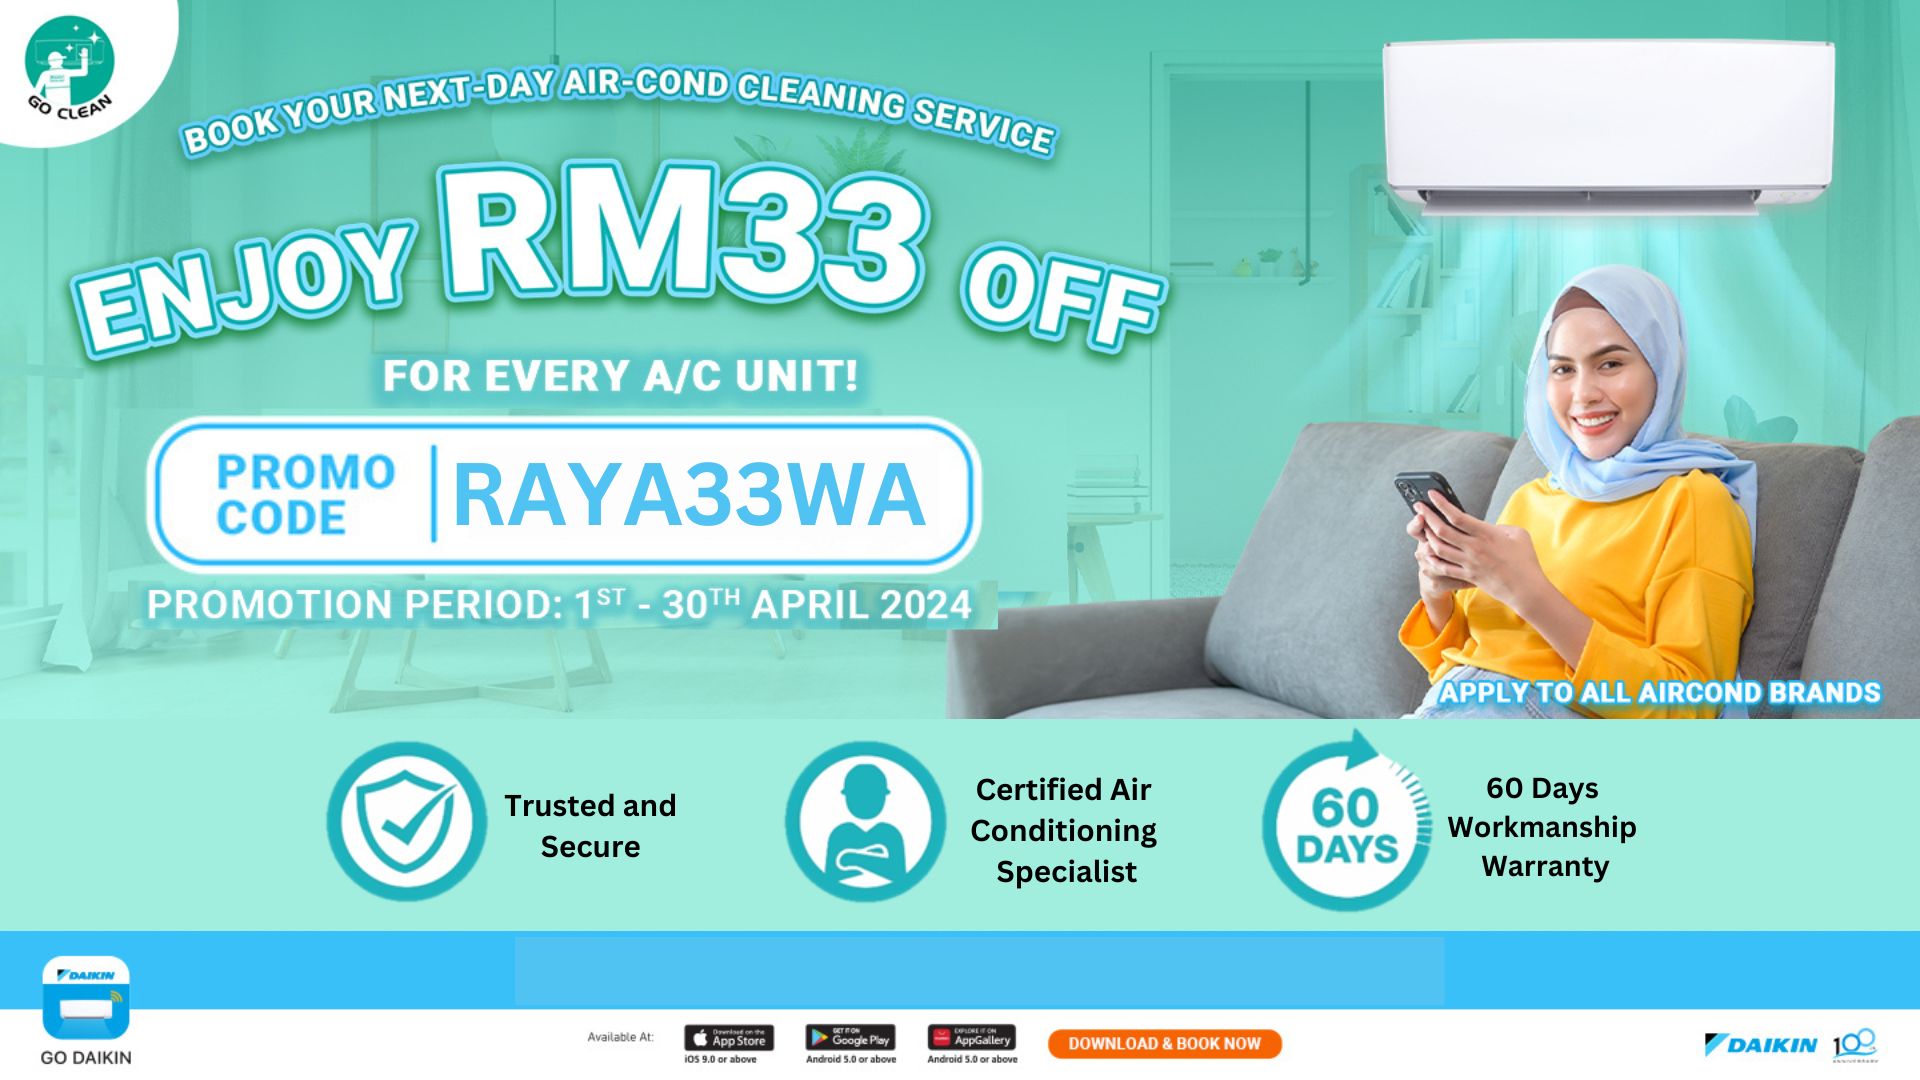 RAYA33WA Get RM33 Off For Every Unit | Daikin Malaysia